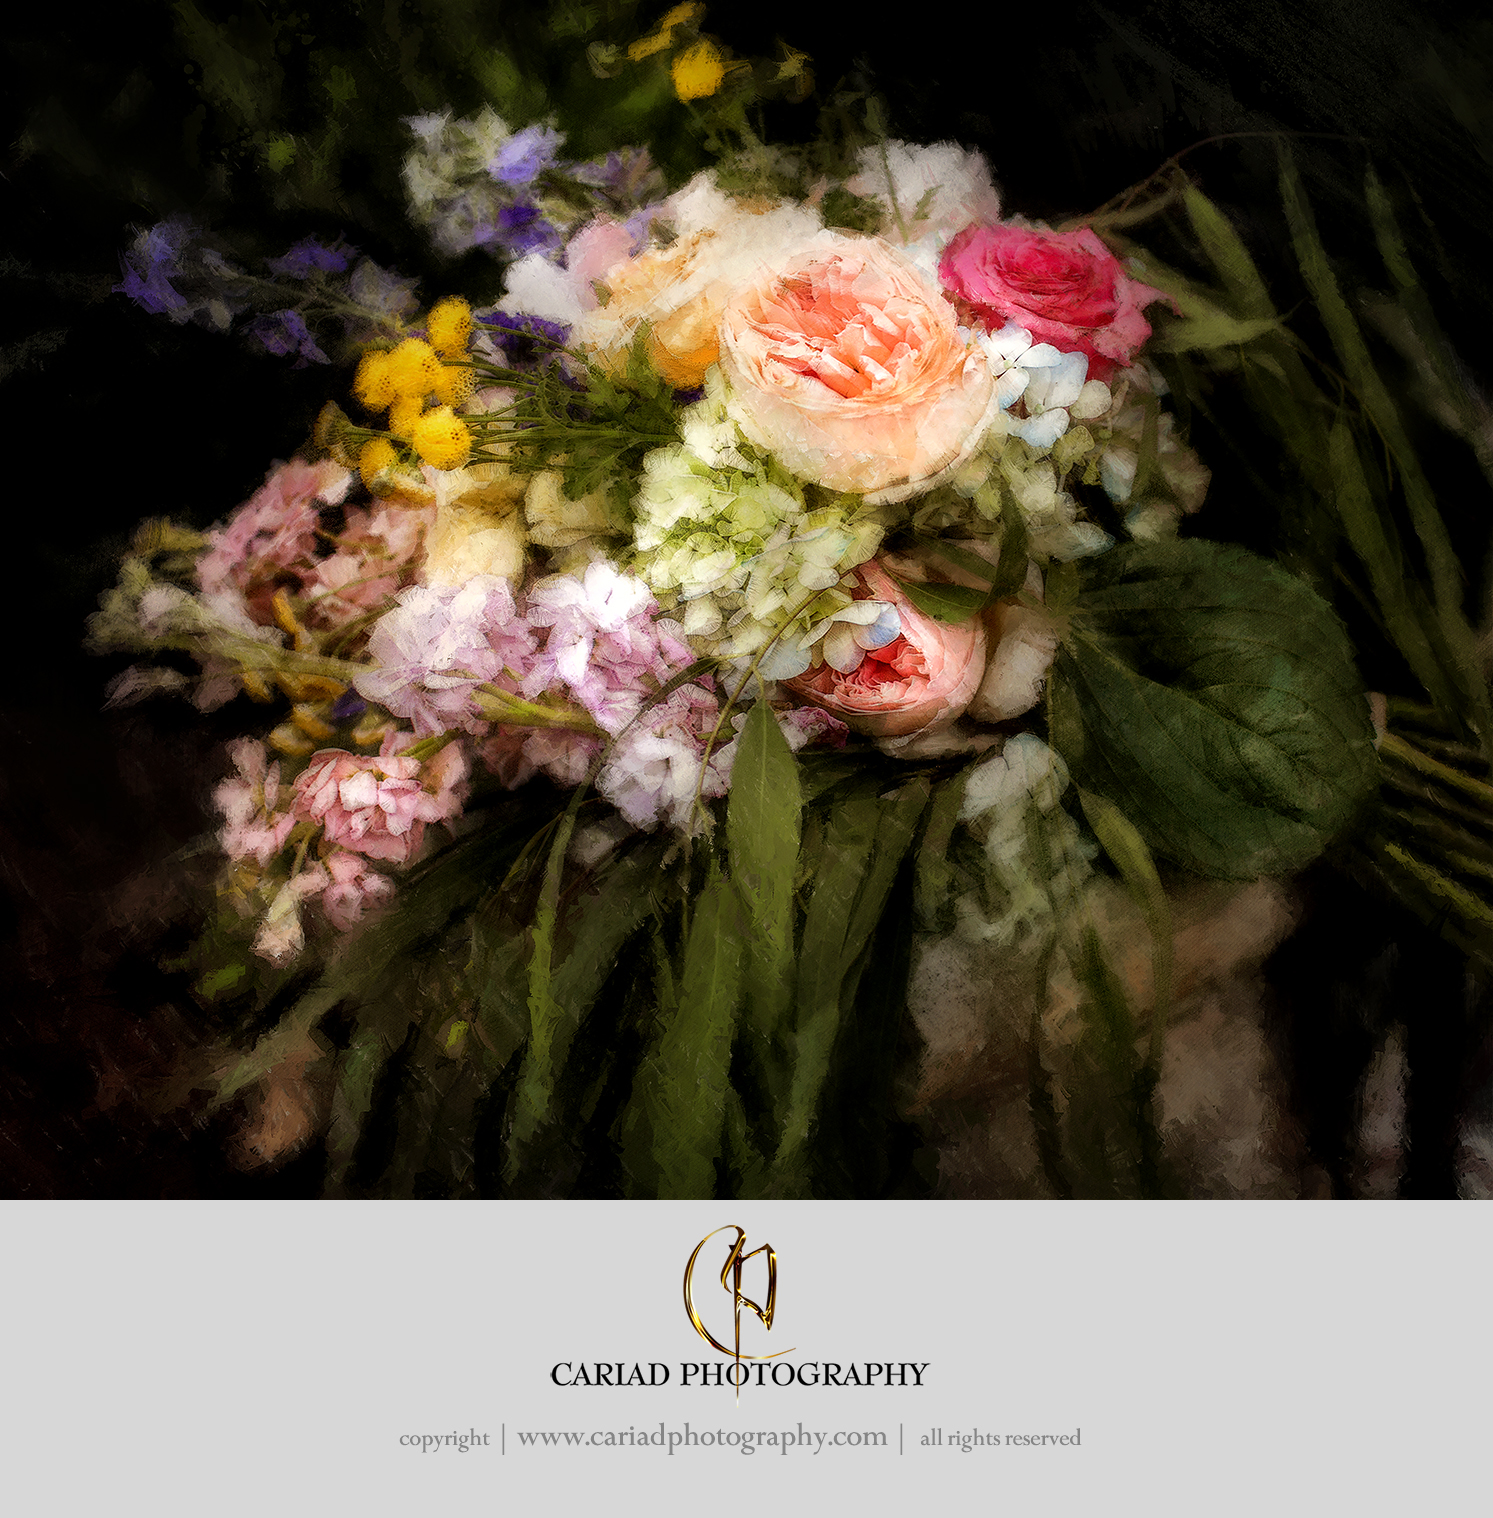 Cariad Photography Blog: Artsy Wedding Bouquets and Wedding Flowers ...